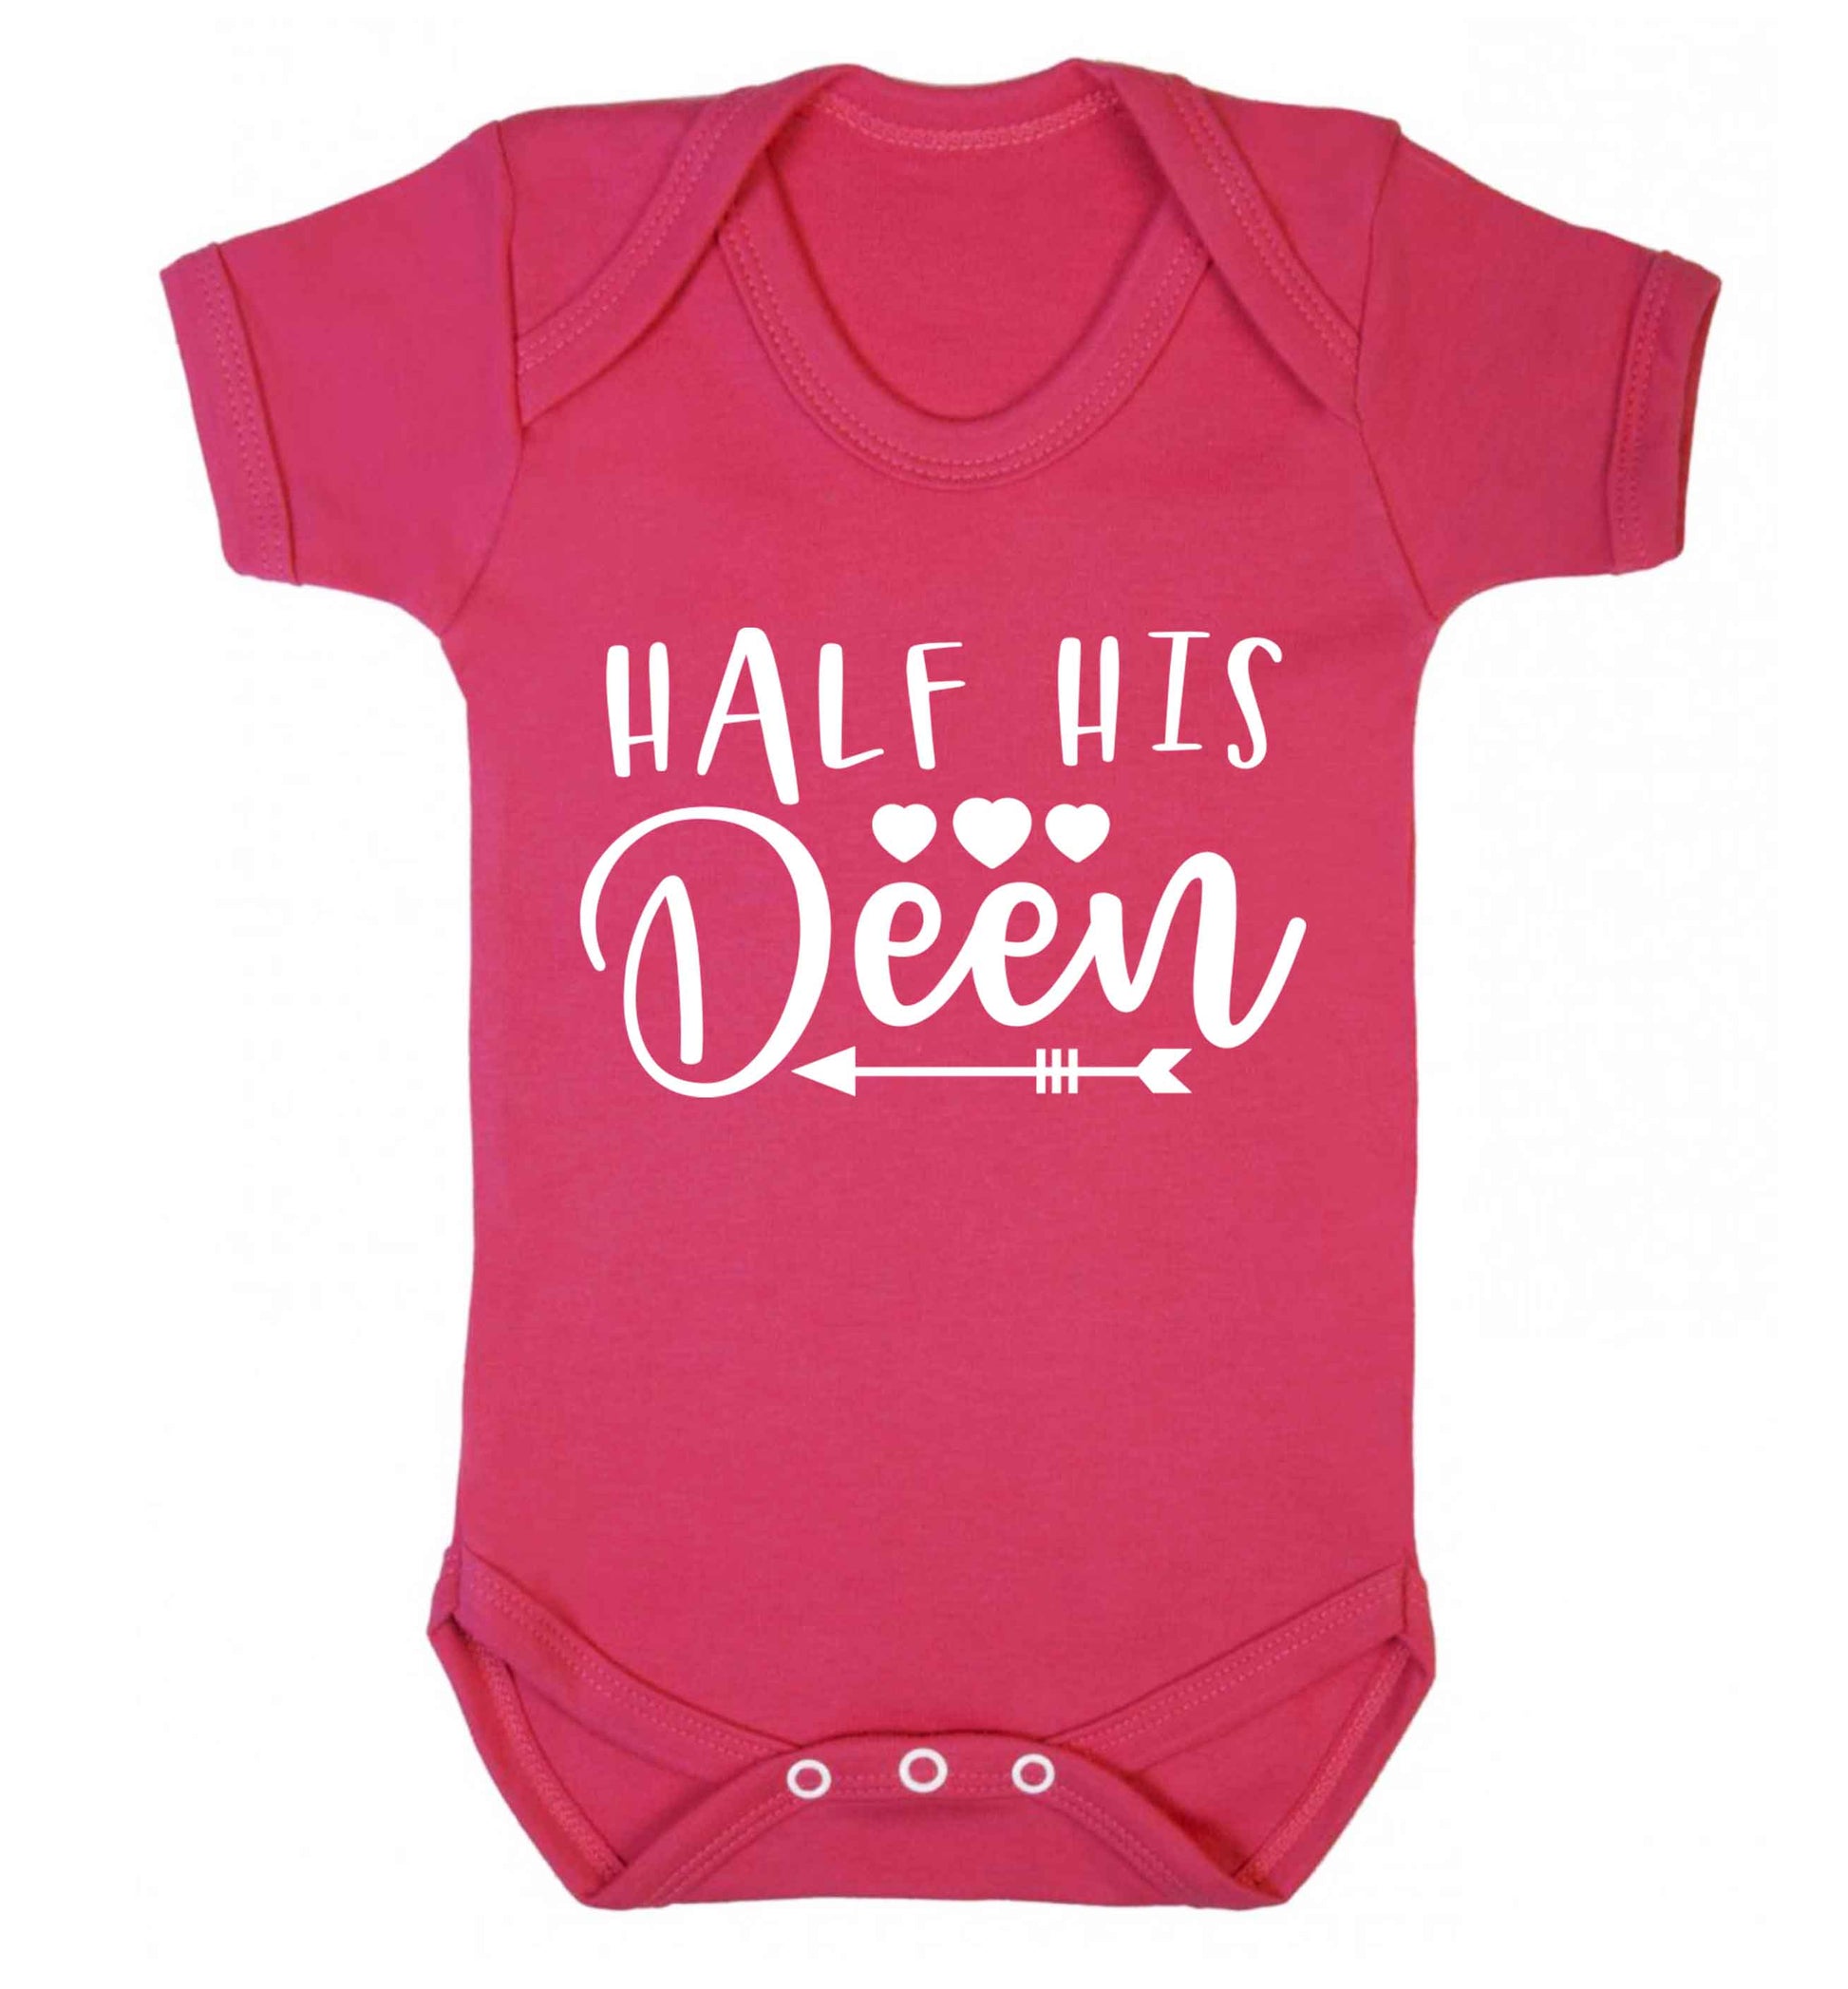 Half his deen Baby Vest dark pink 18-24 months